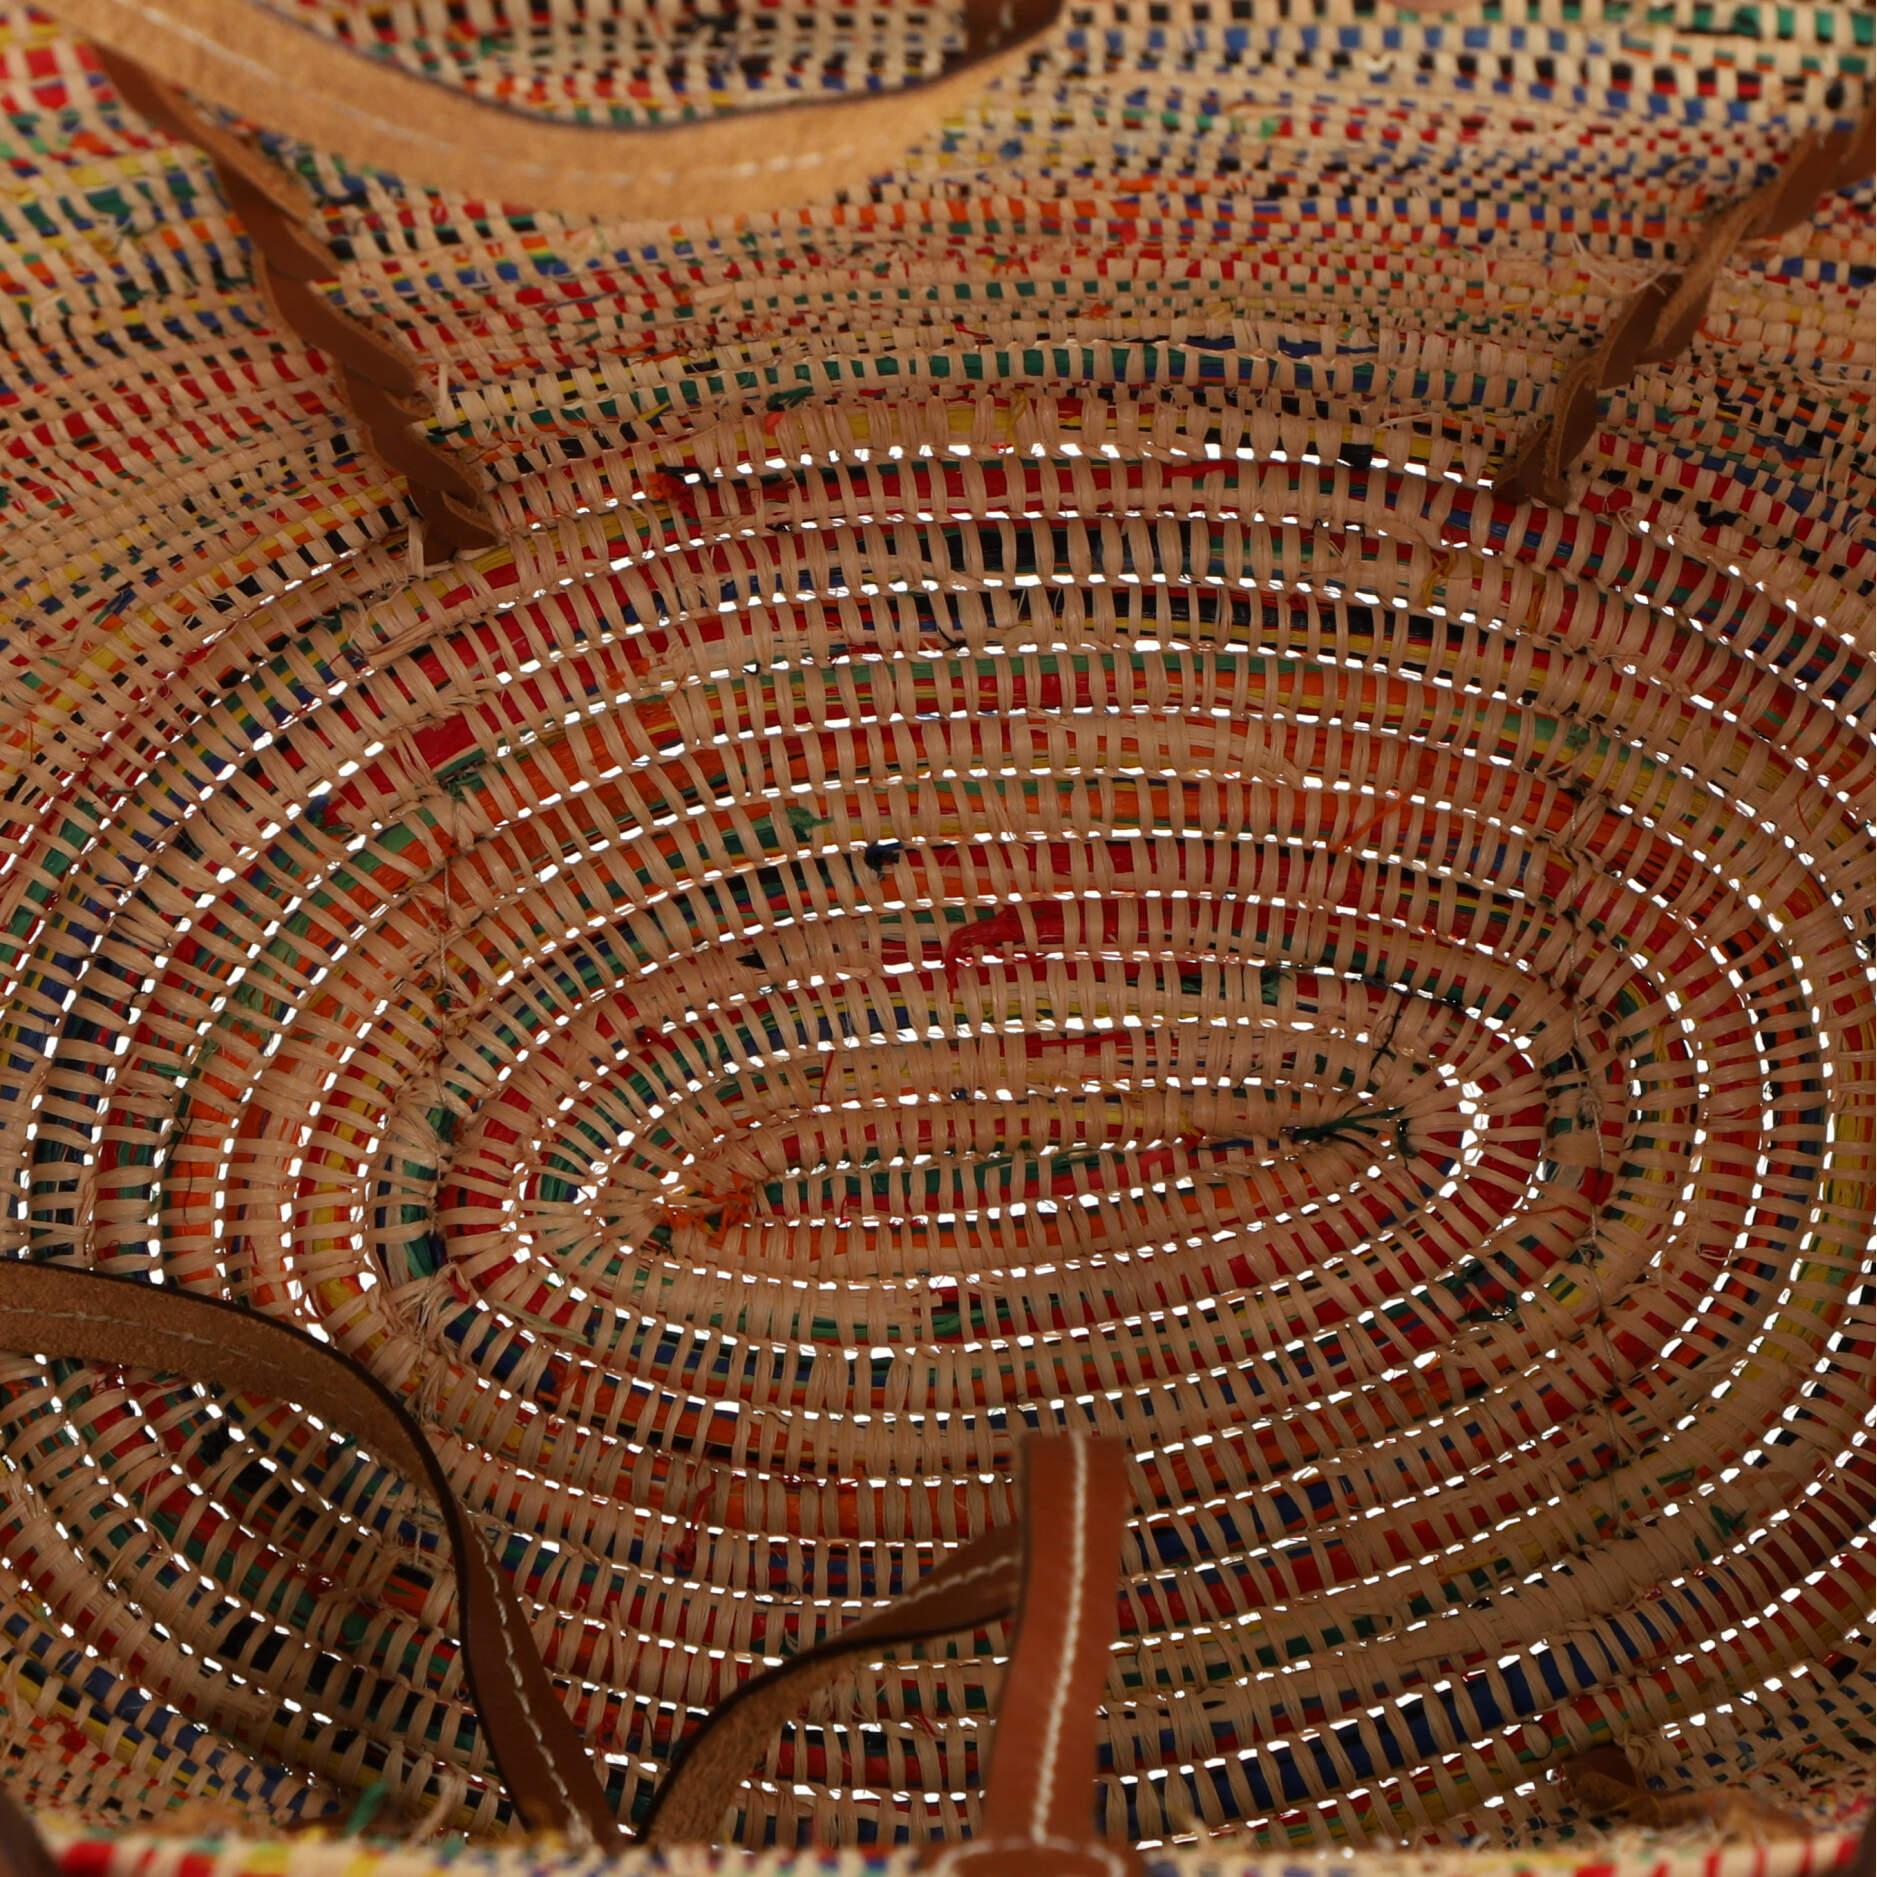 Women's or Men's Prada Basket Tote Woven Raffia with Leather Medium